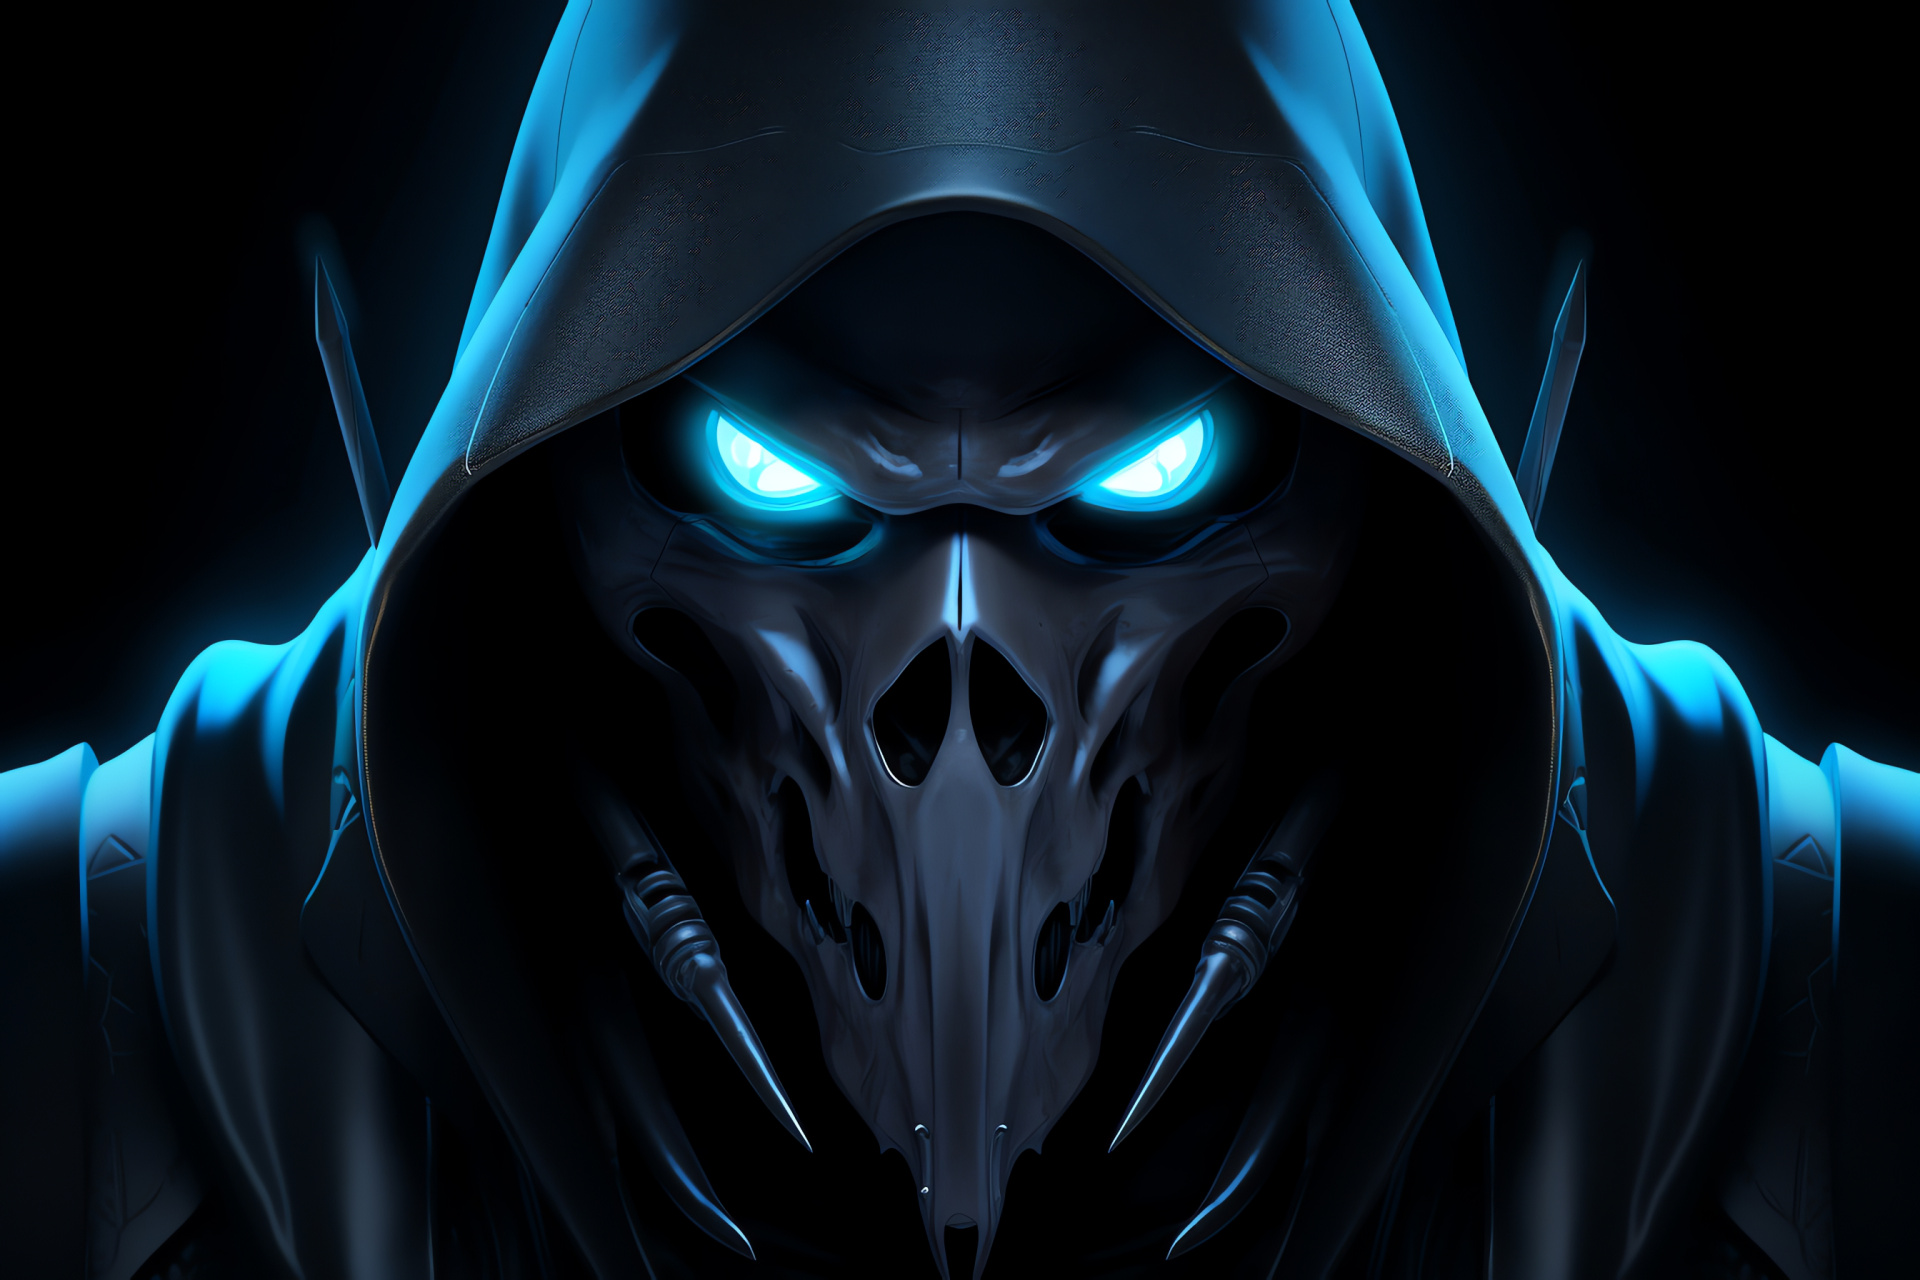 Overwatch's Reaper, Character's menacing face, Video game avatar, Eery glow detail, Virtual confrontations, HD Desktop Wallpaper